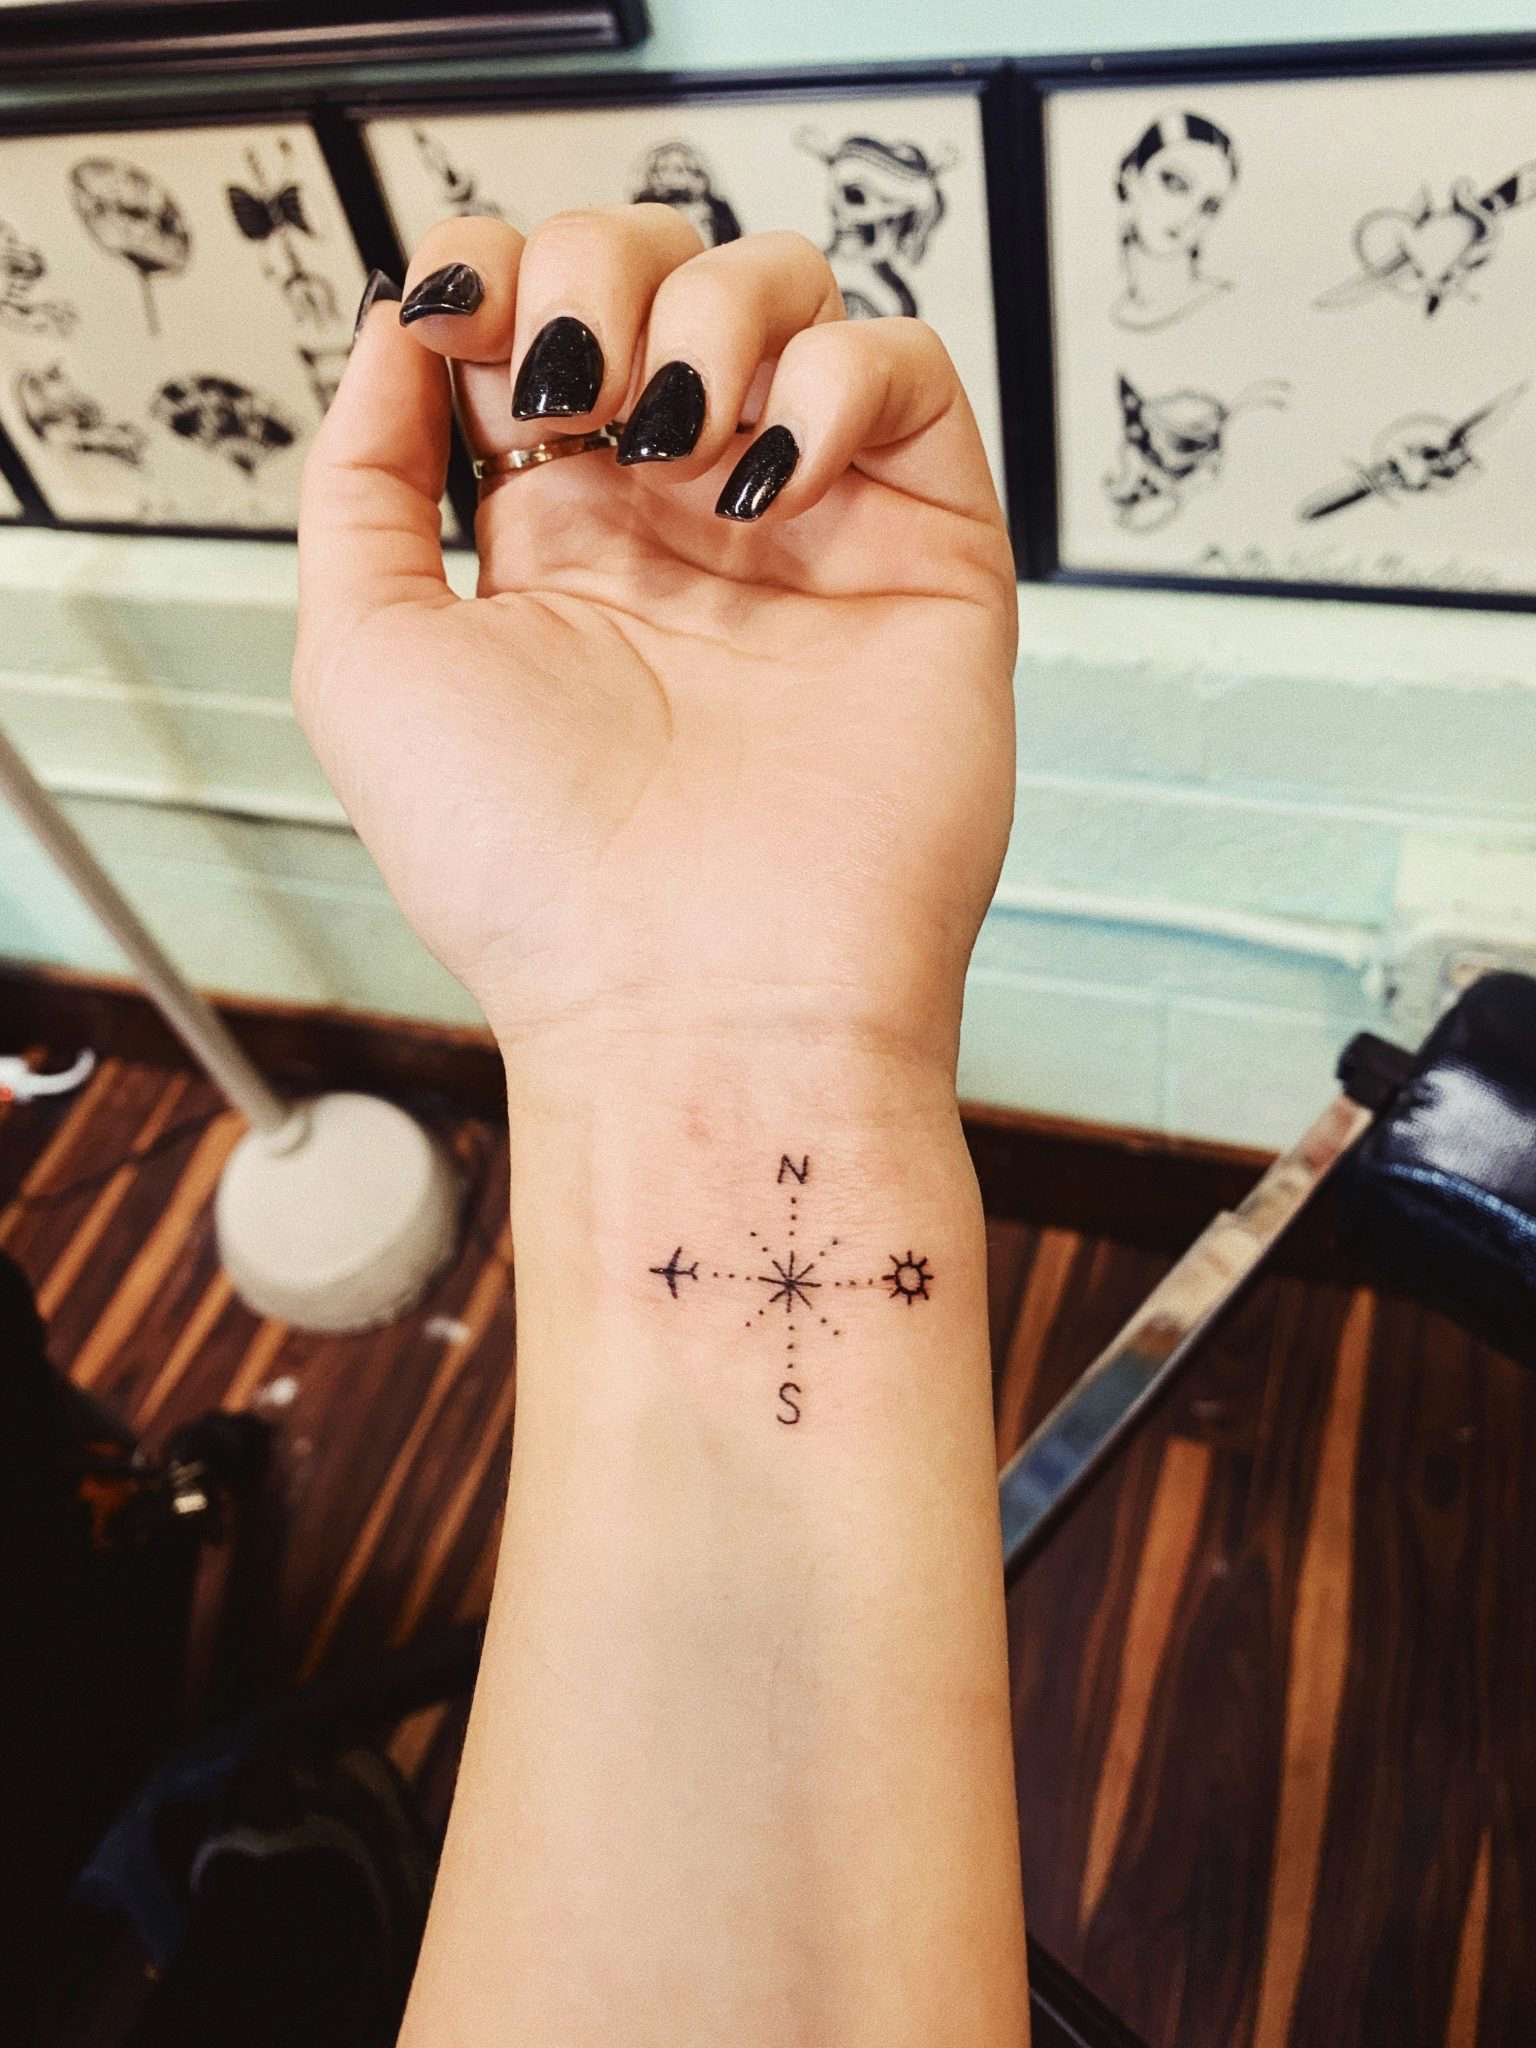 Tatuaje brújula minimalista 